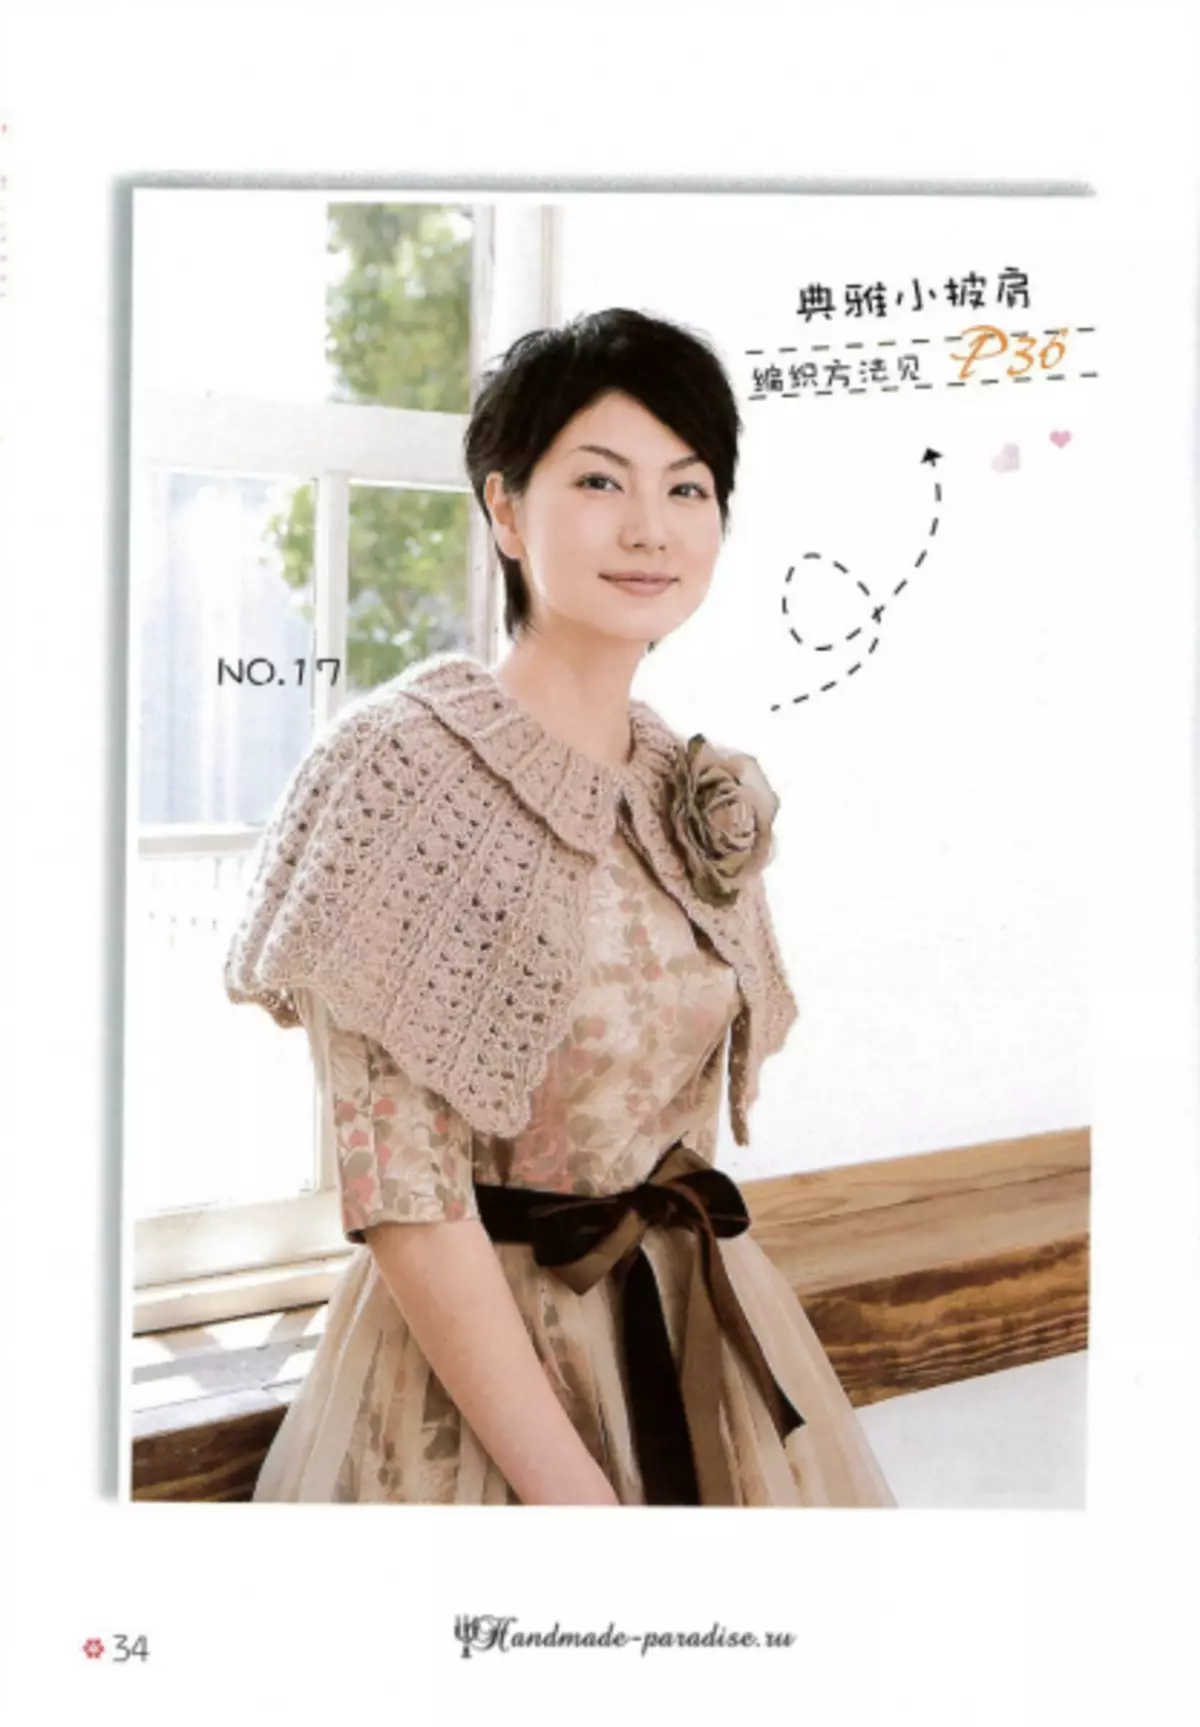 Sharali, Poncho 및 Schemes가있는 일본 잡지의 망토